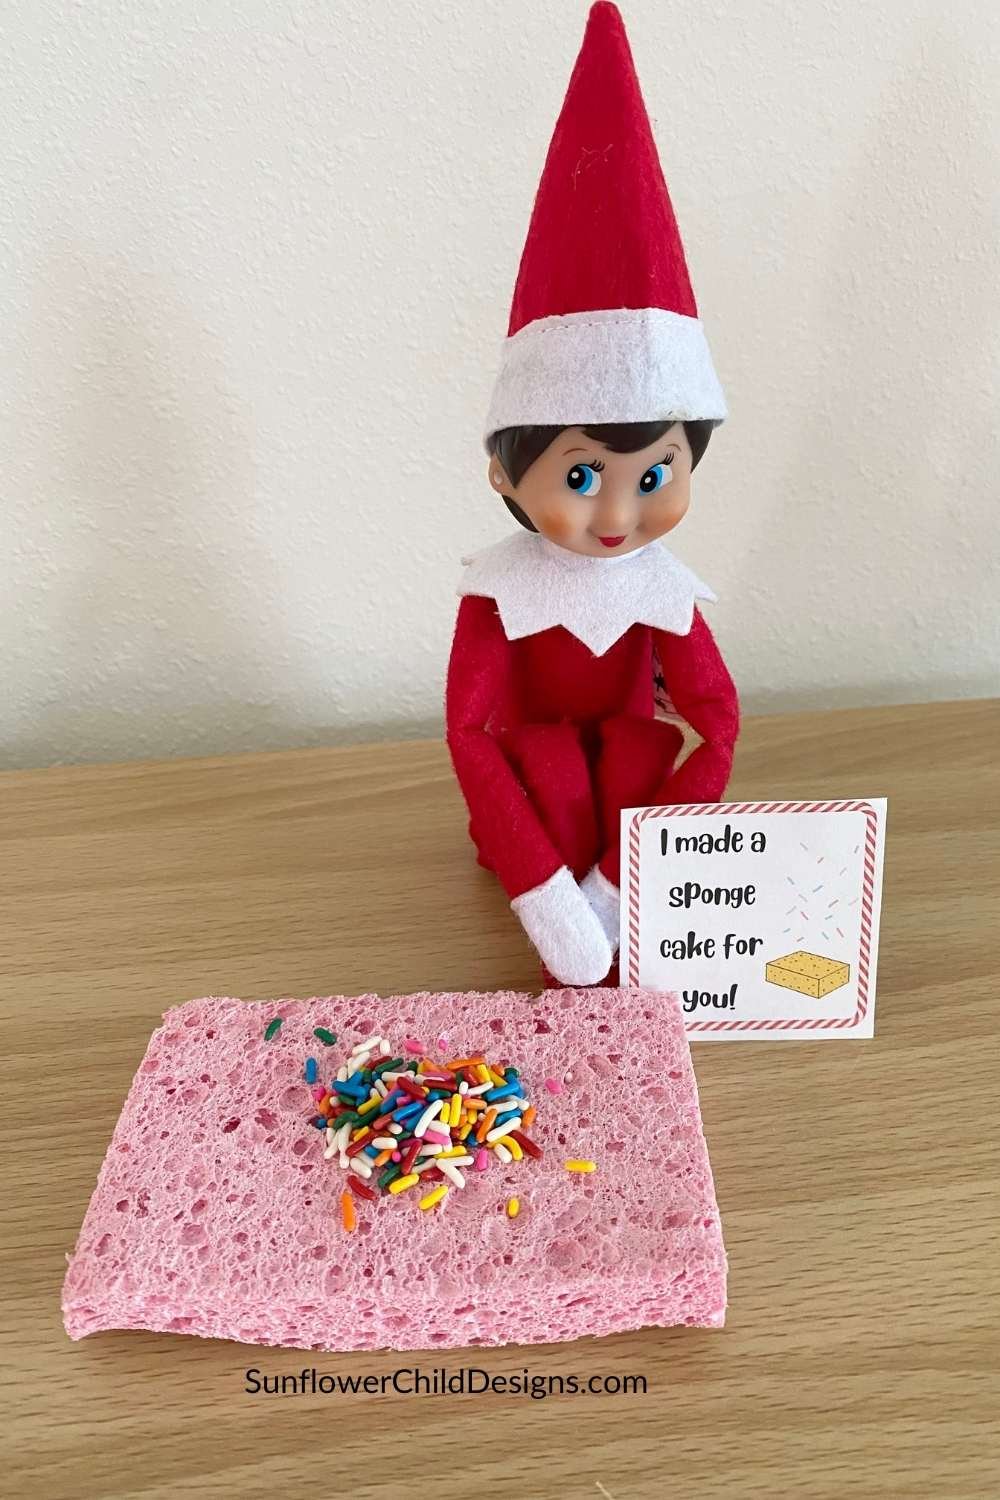 Elf on the Shelf makes a sponge cake